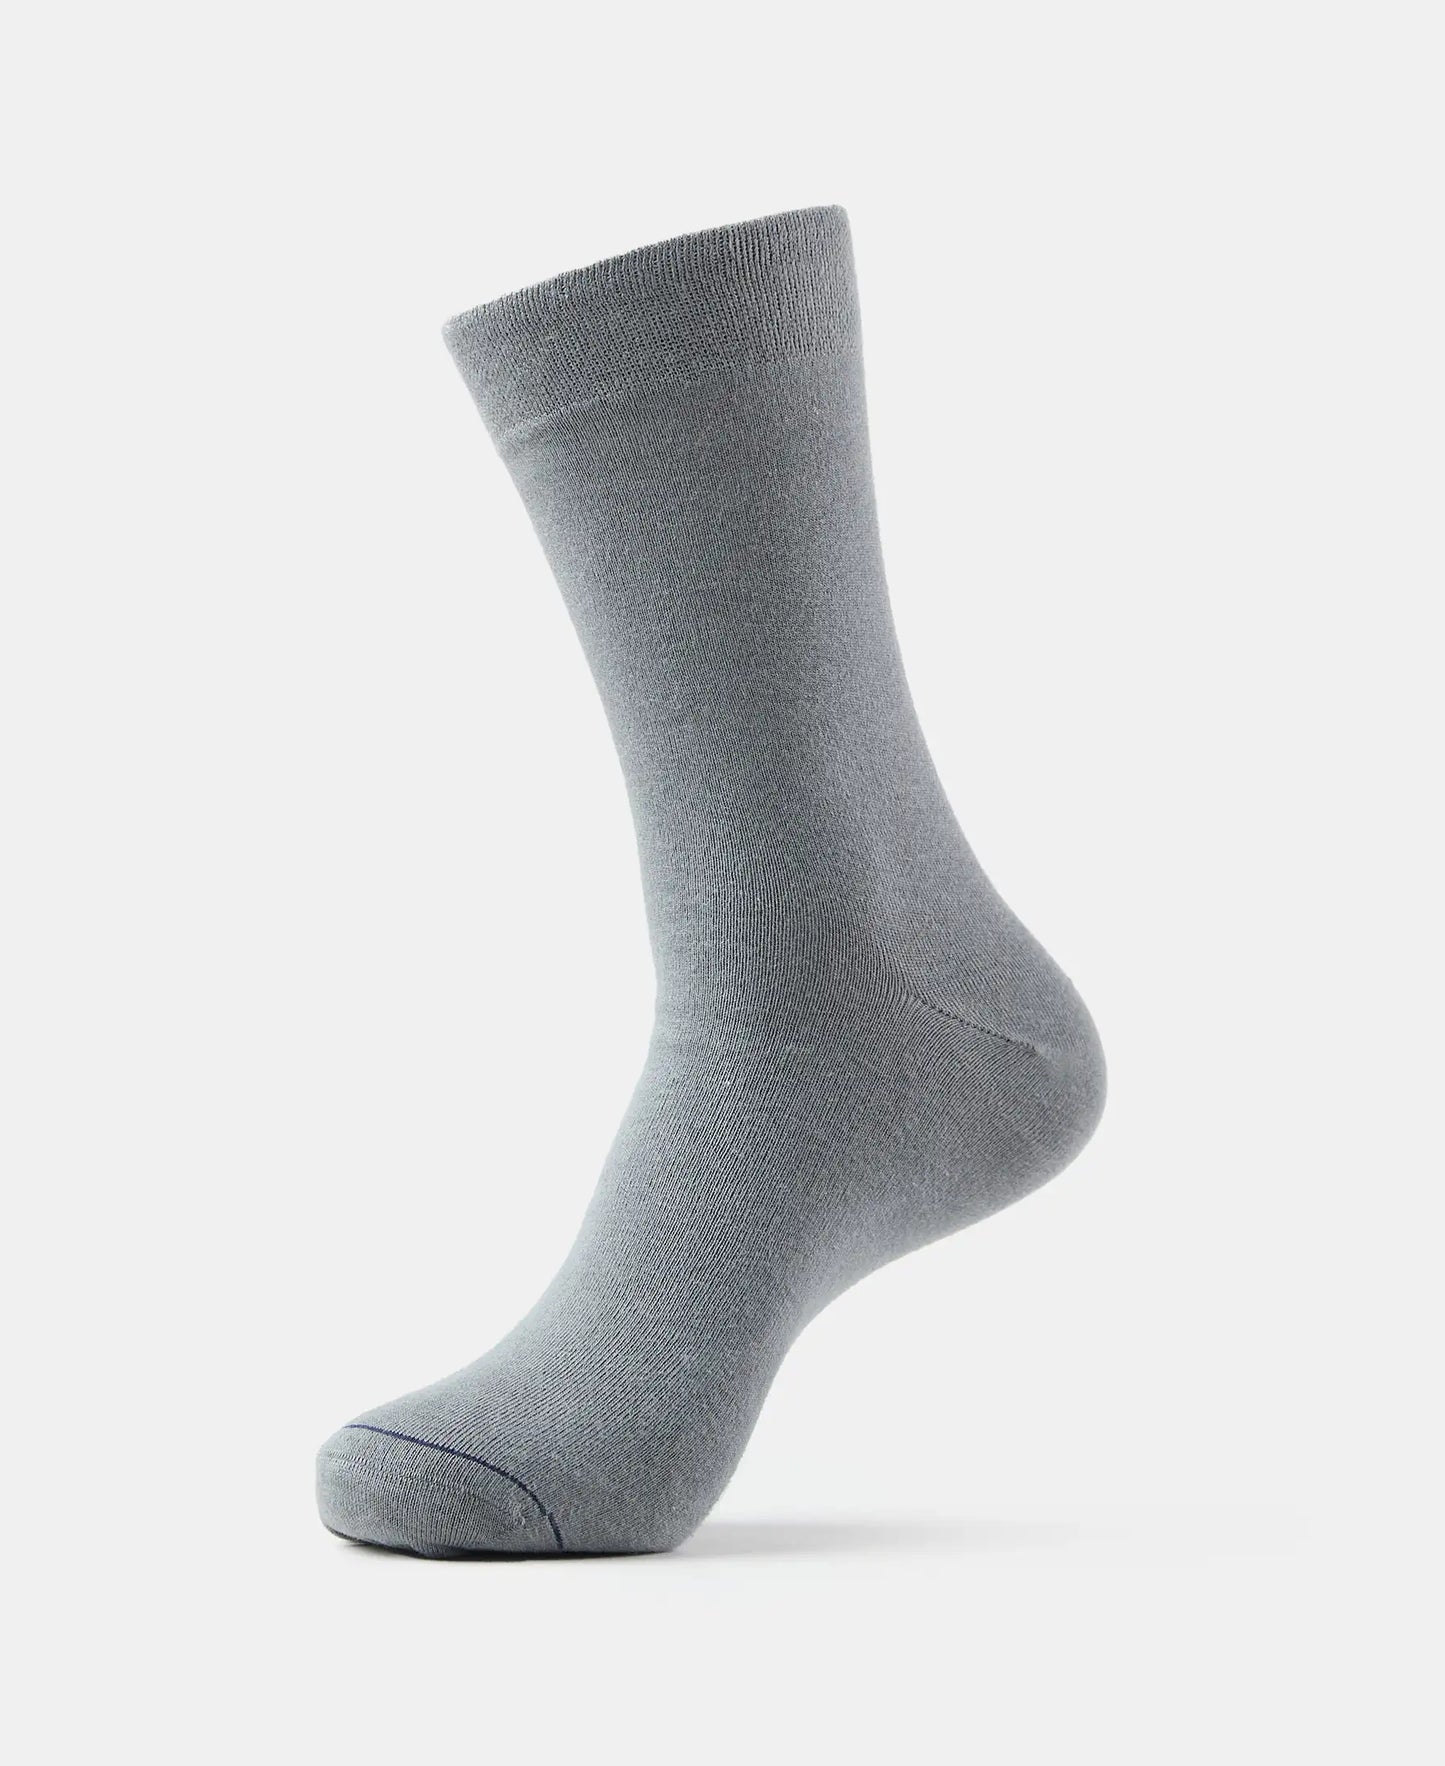 Modal Cotton Elastane Stretch Crew Length Socks with StayFresh Treatment - Mid Grey